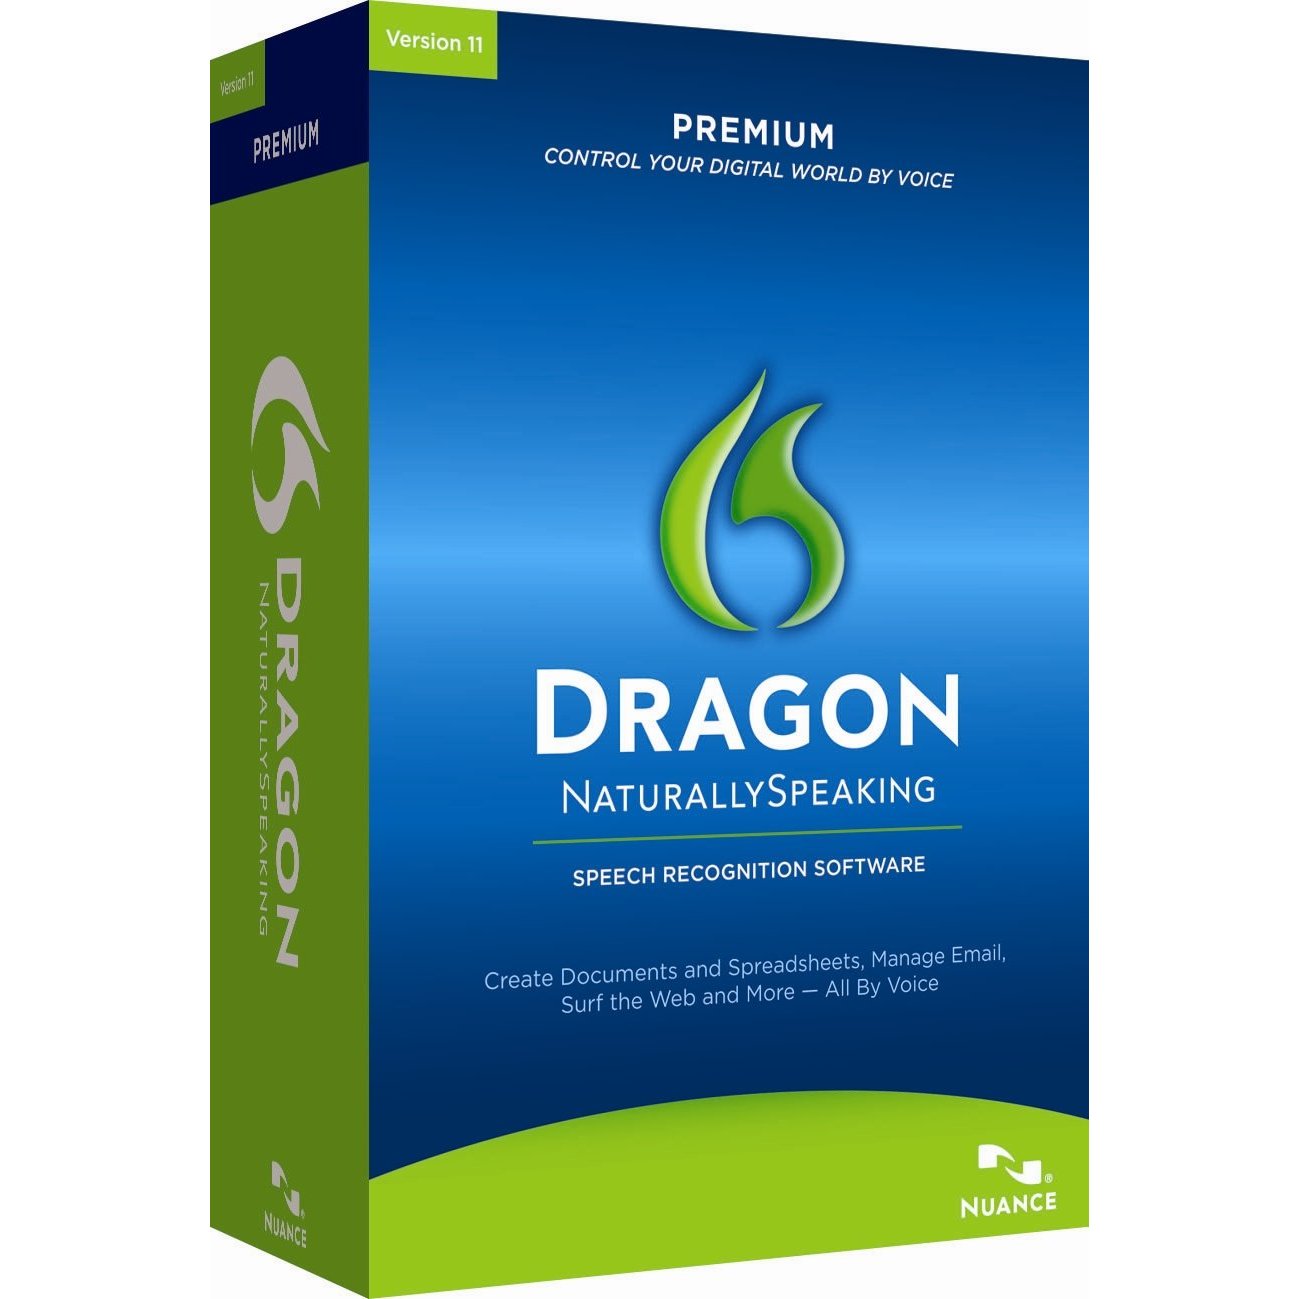 http://thetechjournal.com/wp-content/uploads/images/1202/1328283588-dragon-naturallyspeaking-premium-11-software-review-1.jpg